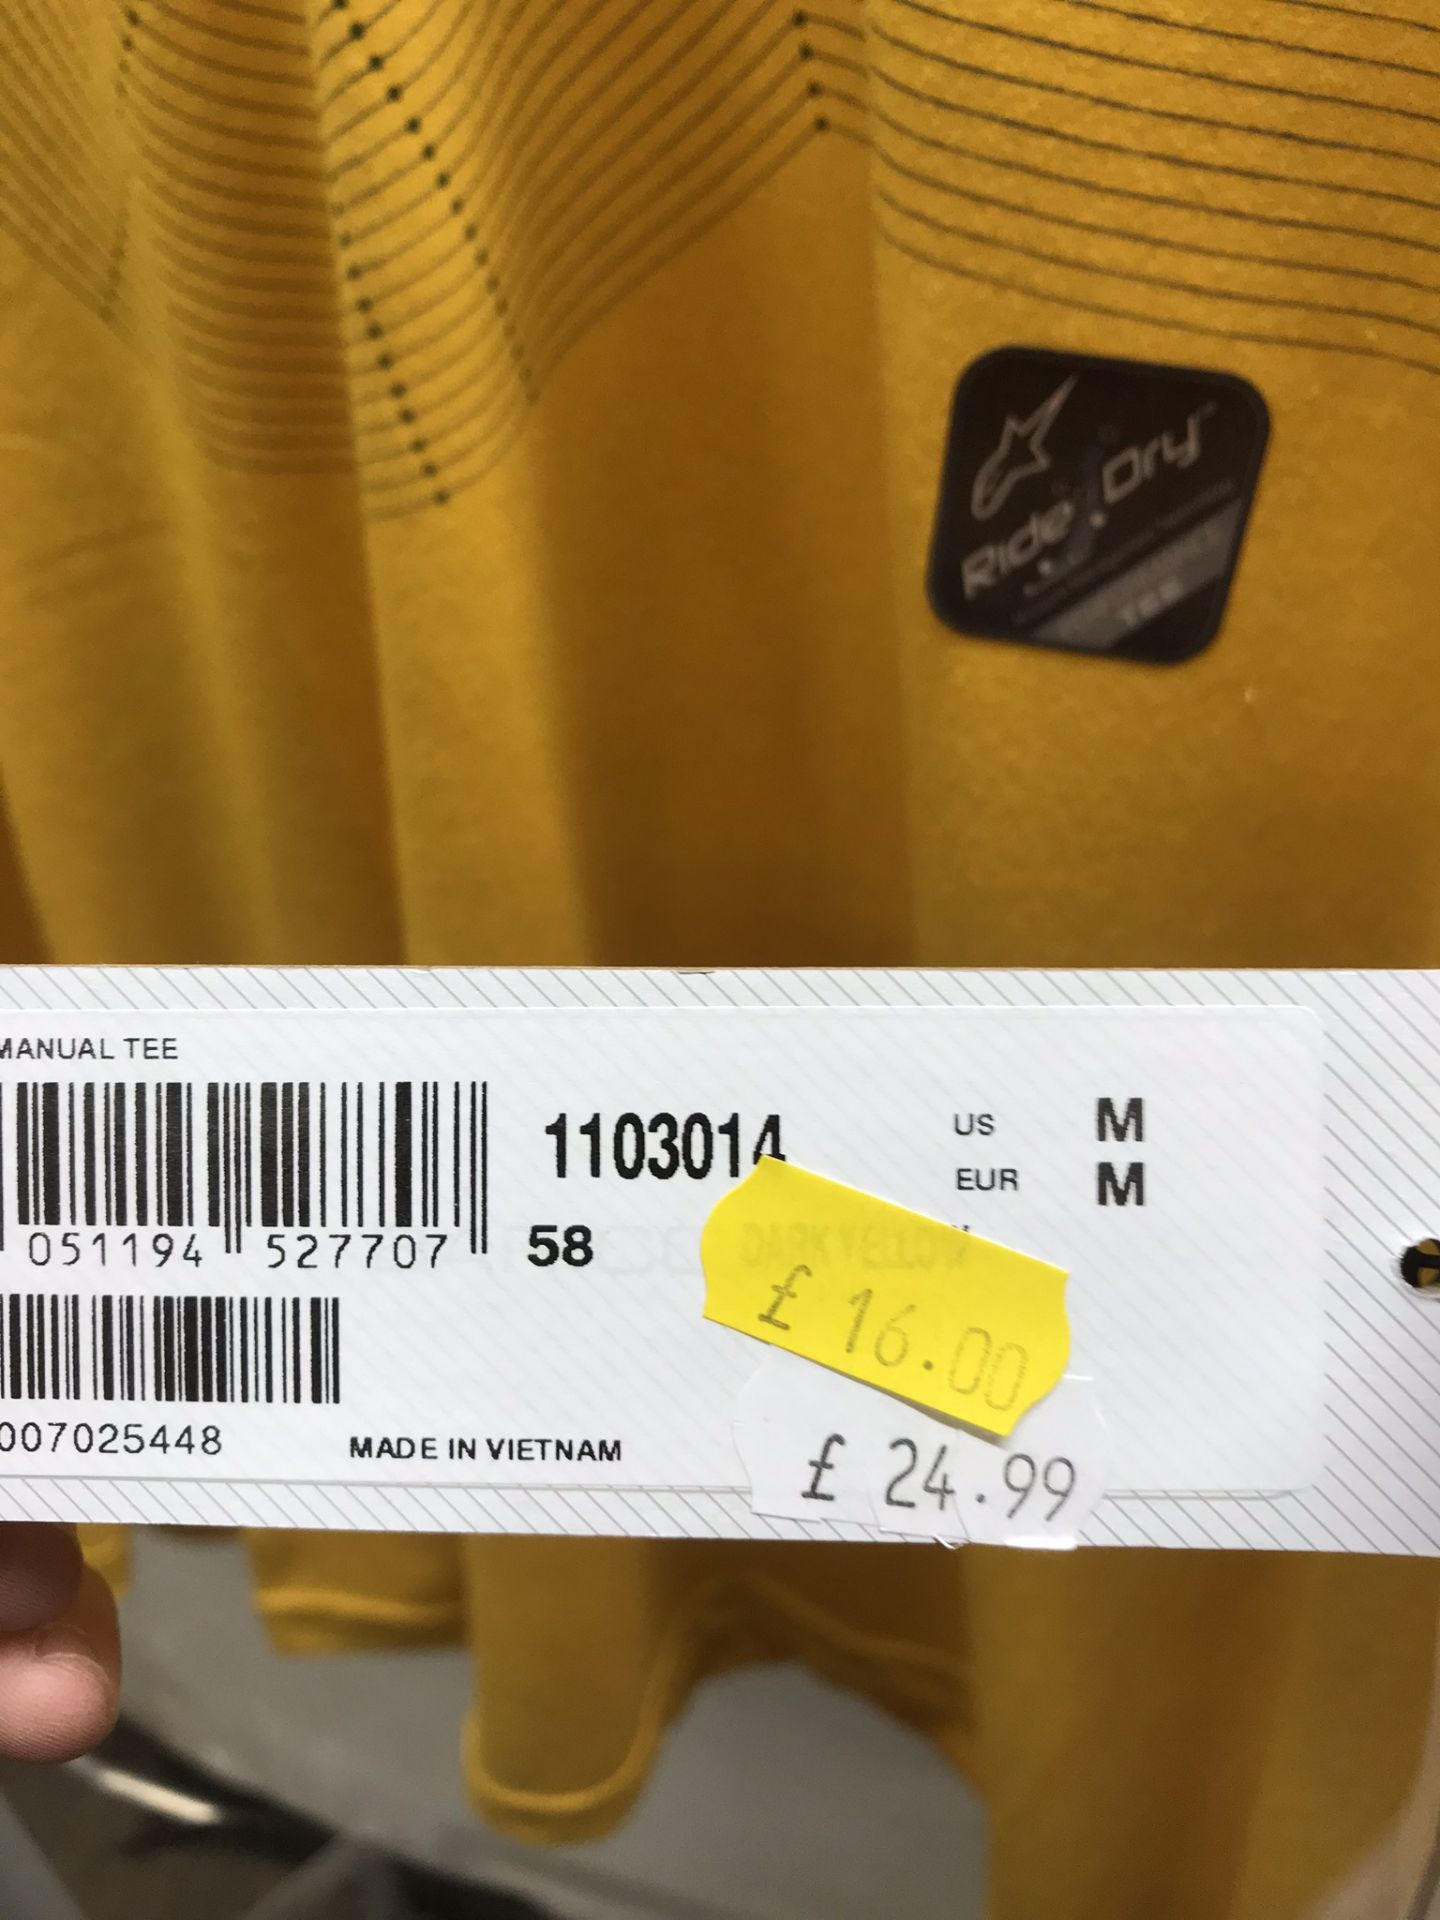 4 x Alpinestars Men's Manual T-Shirts - Dark Yellow - RRP £100.00 - Various sizes - Image 4 of 8